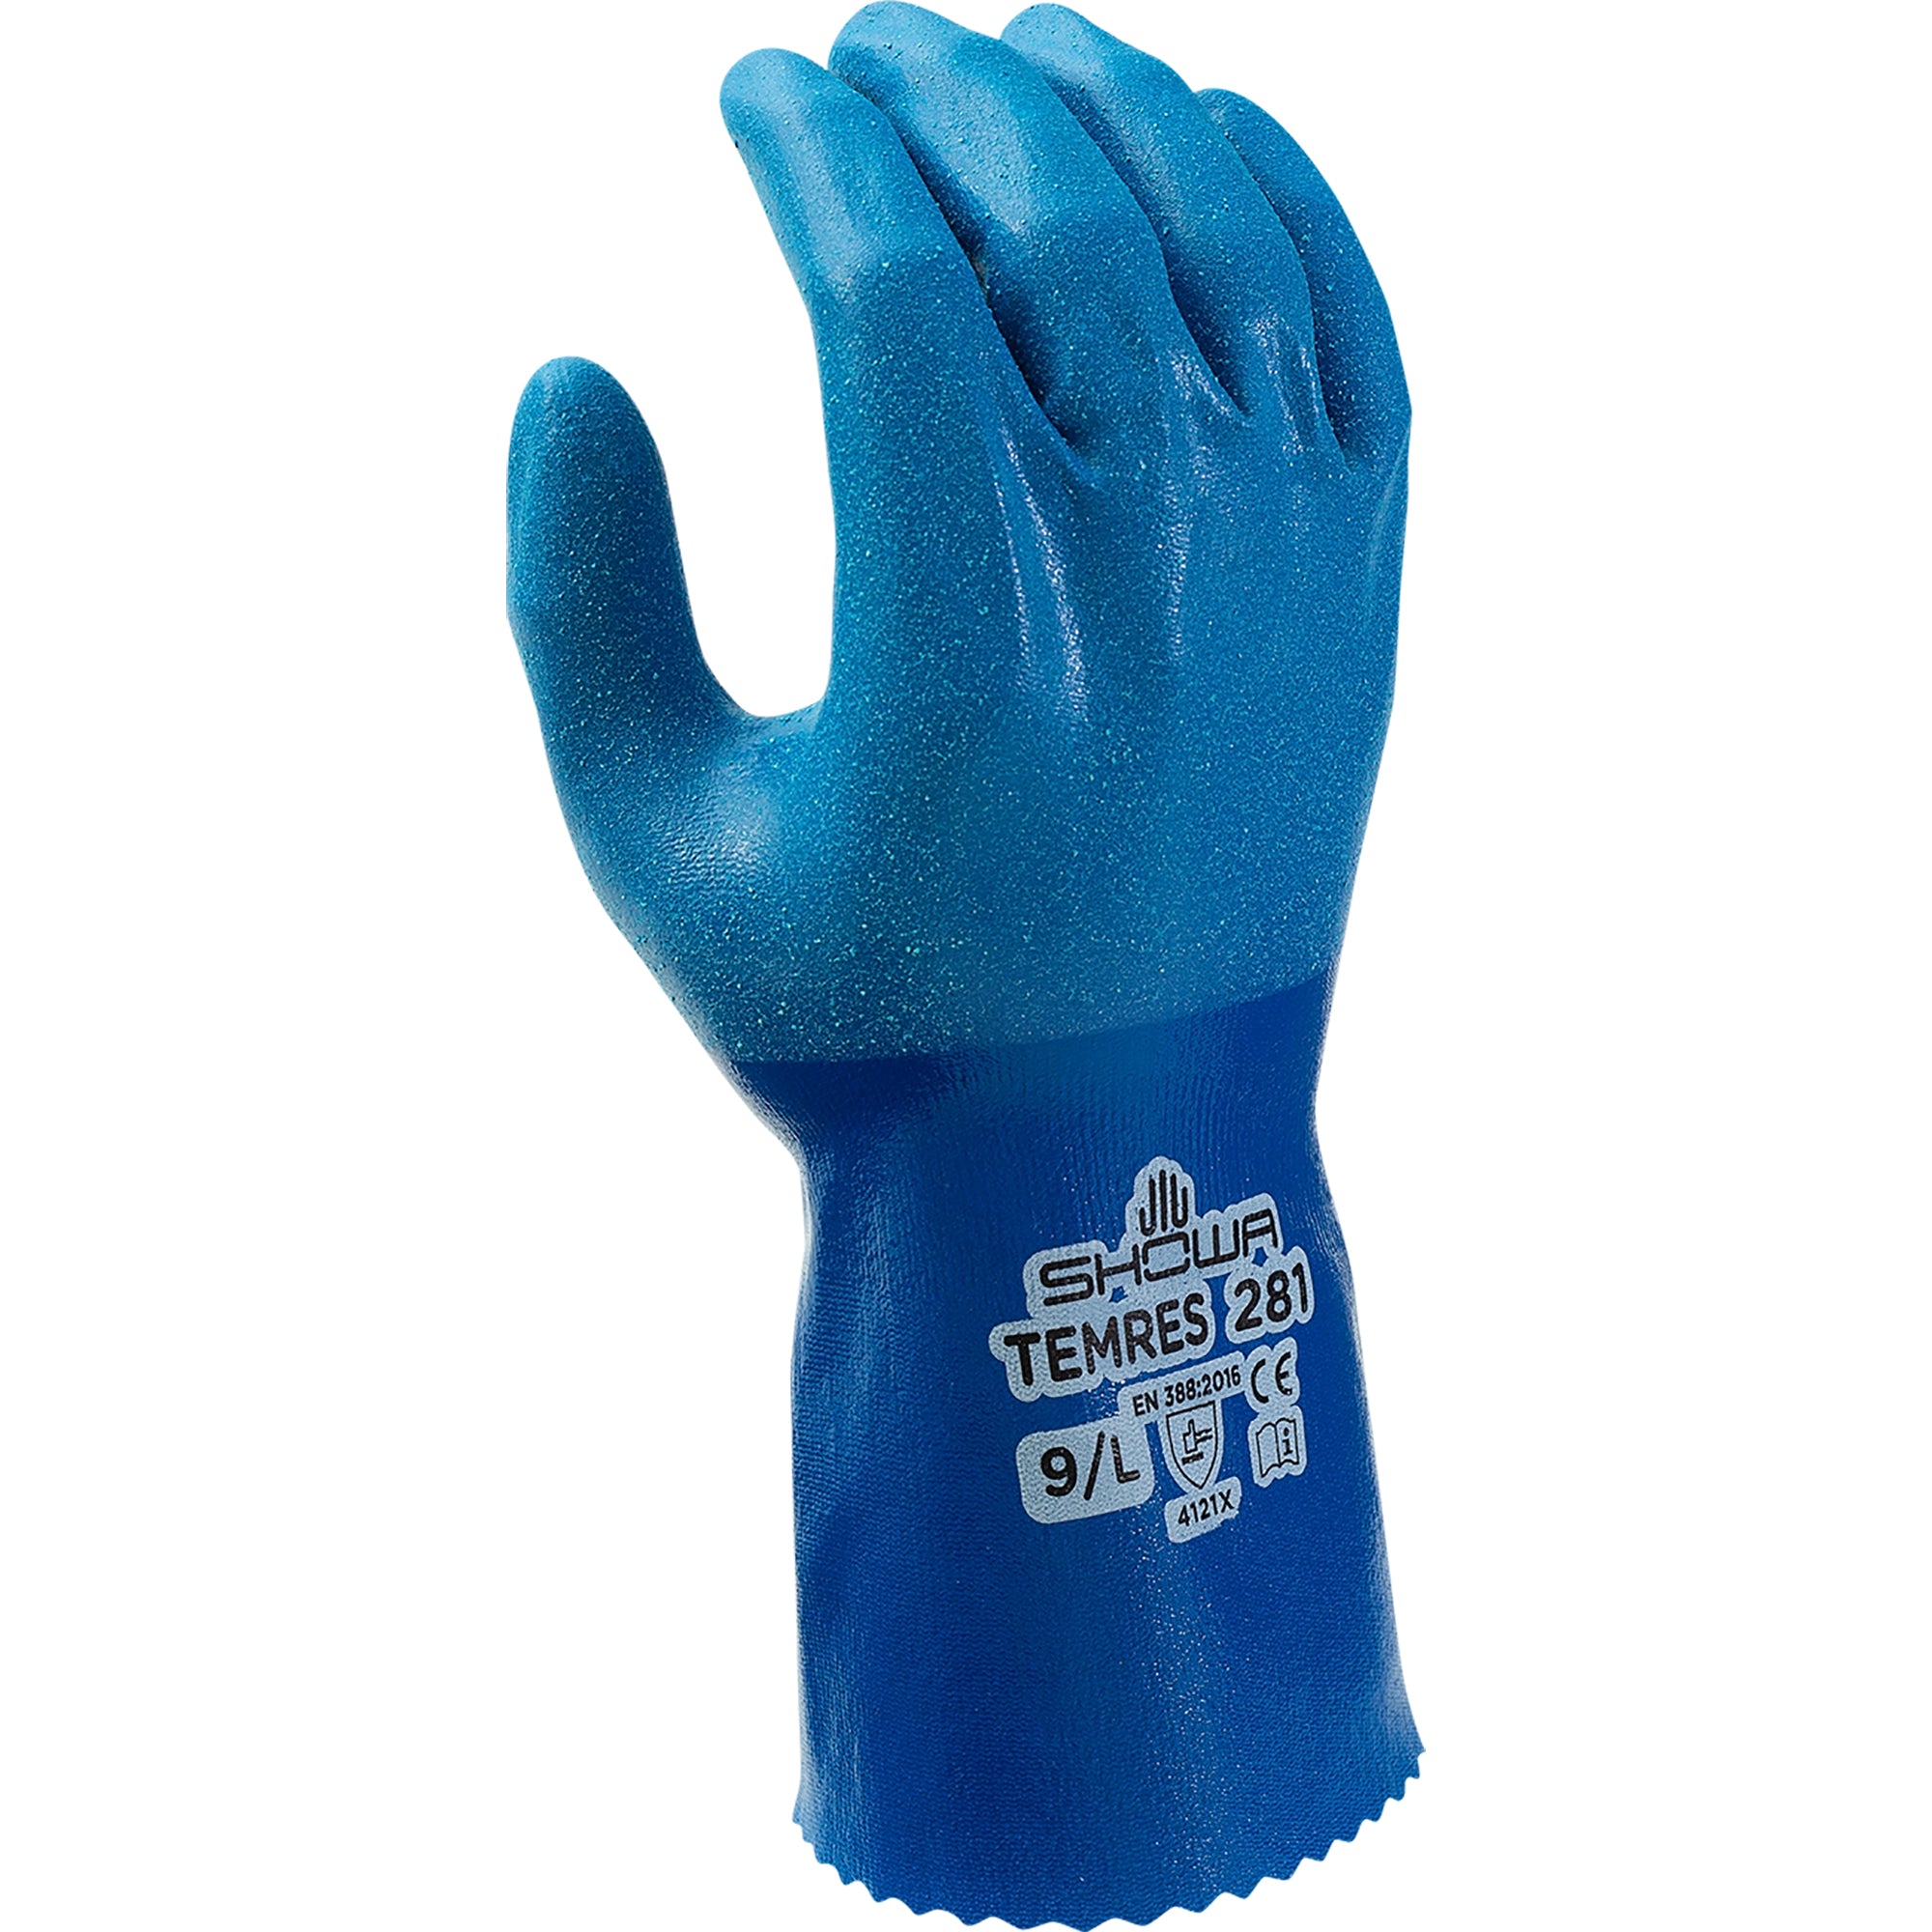 Showa TEMRES® 281 Breathable Polyurethane Waterproof Work Glove